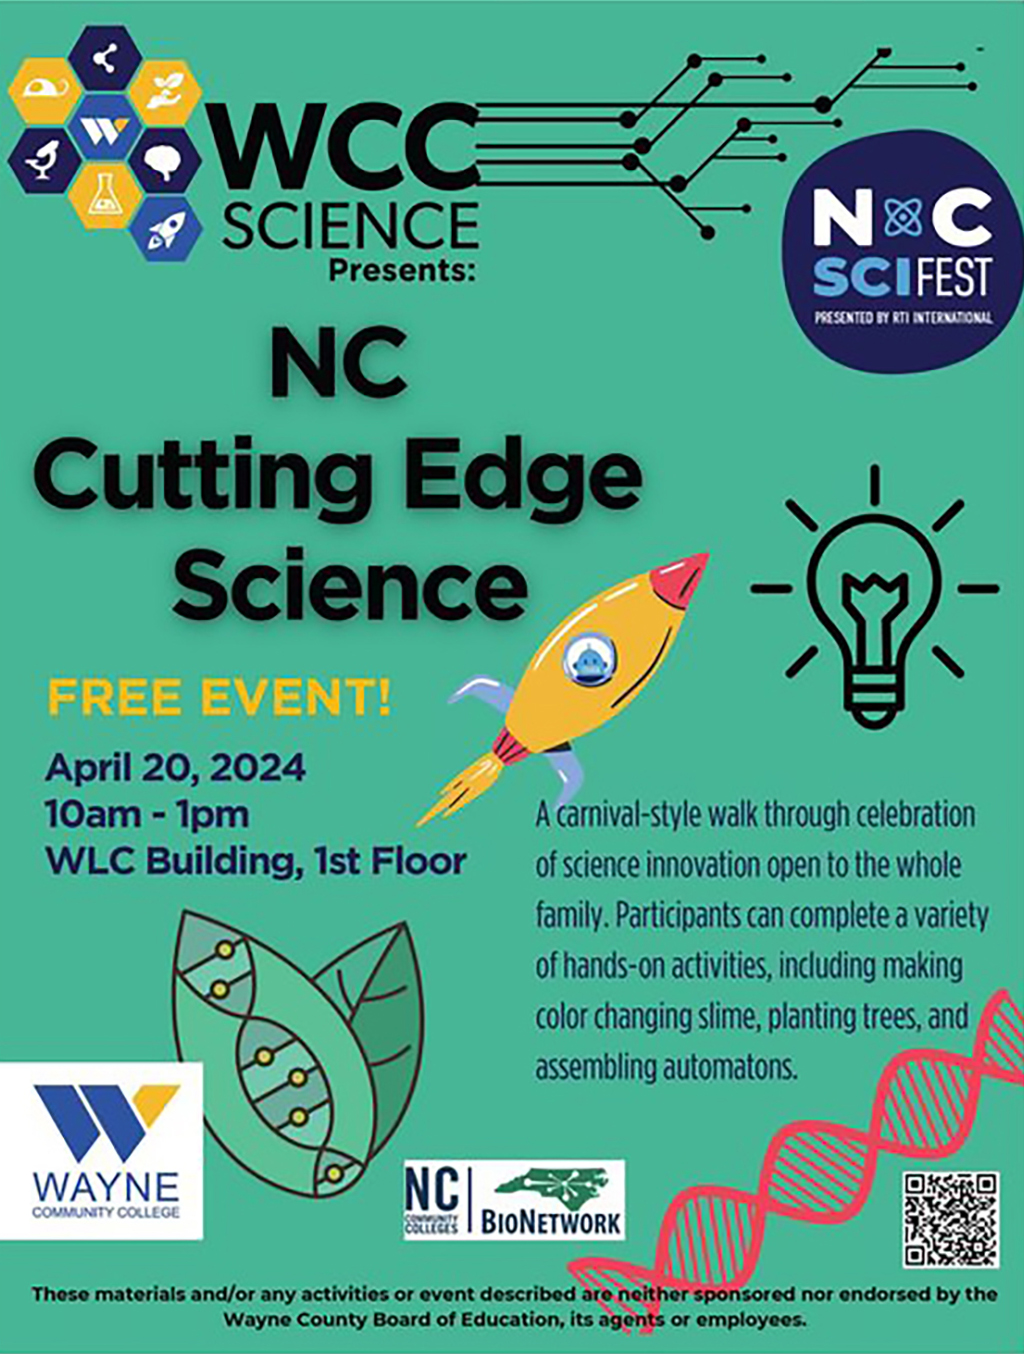 WCC Hosting NC Cutting Edge Science